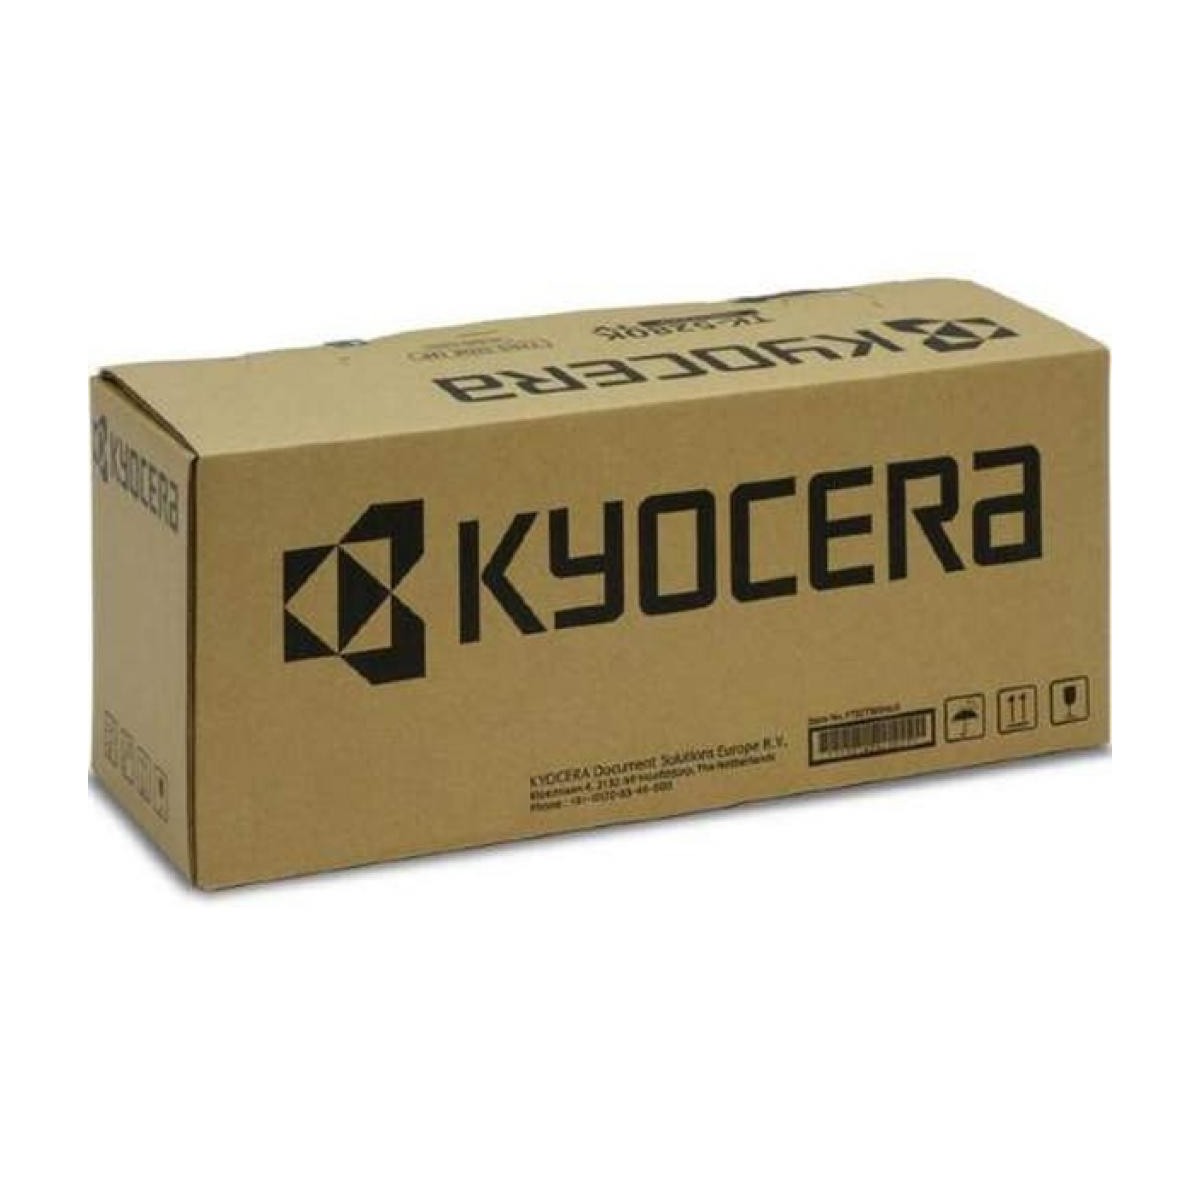 Kyocera DK-8325 - Original - Kyocera - TASKalfa 2550/2551ci - 1 pc(s) - 200000 pages - Laser printing